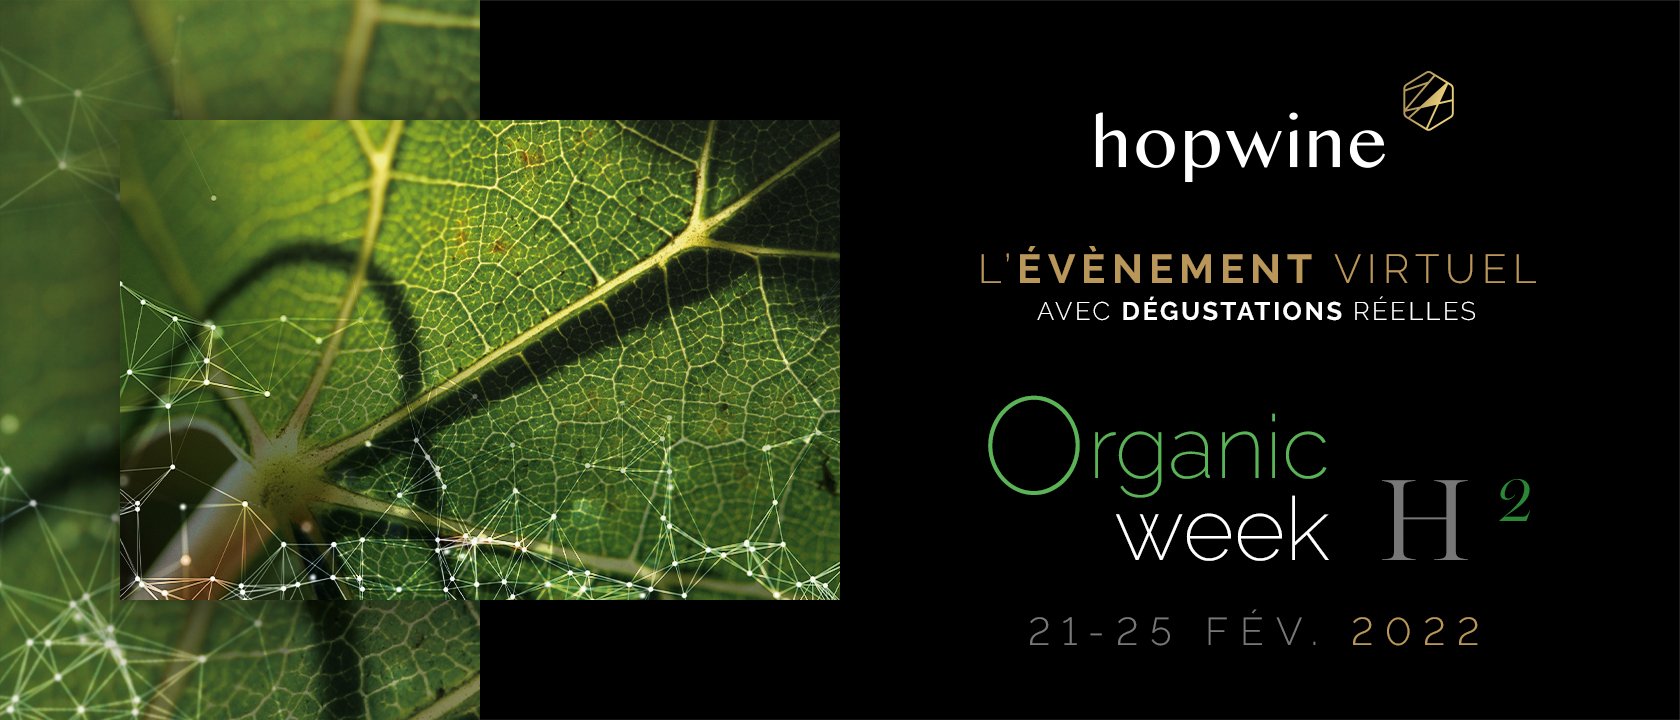 Hopwine 2022 H2 - Organic Week